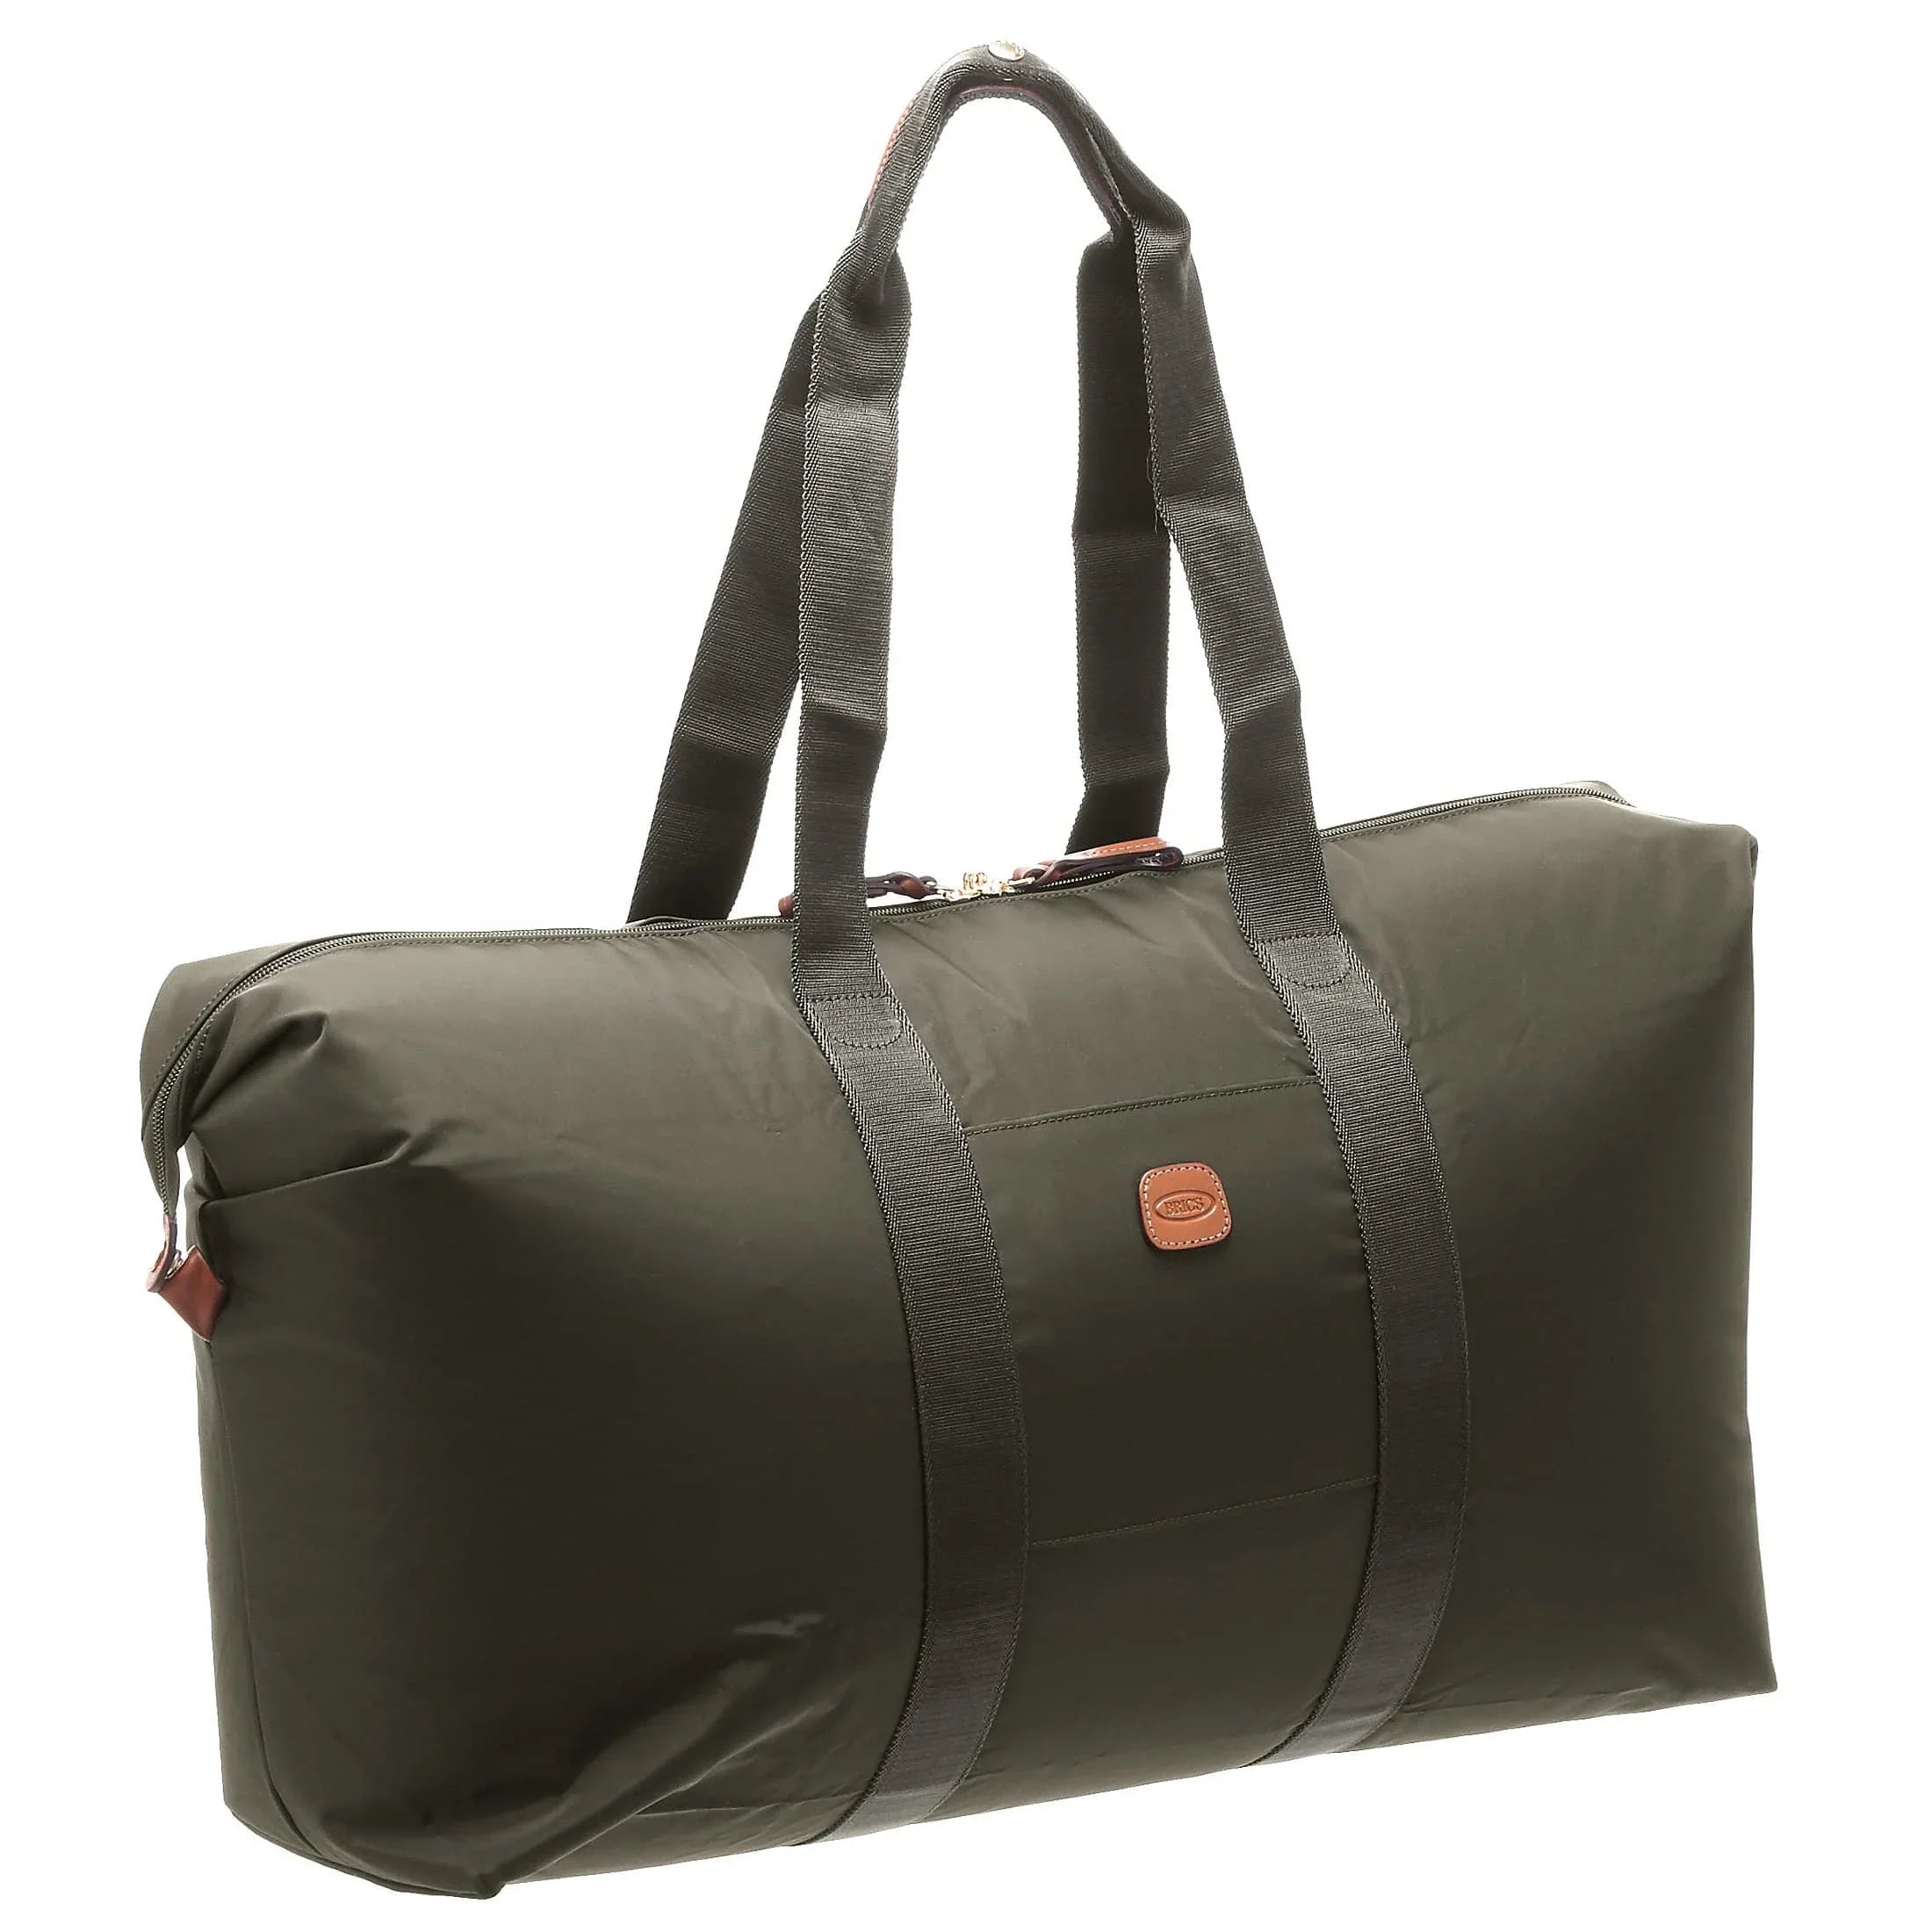 Brics X-Bag travel bag 55 cm - olive